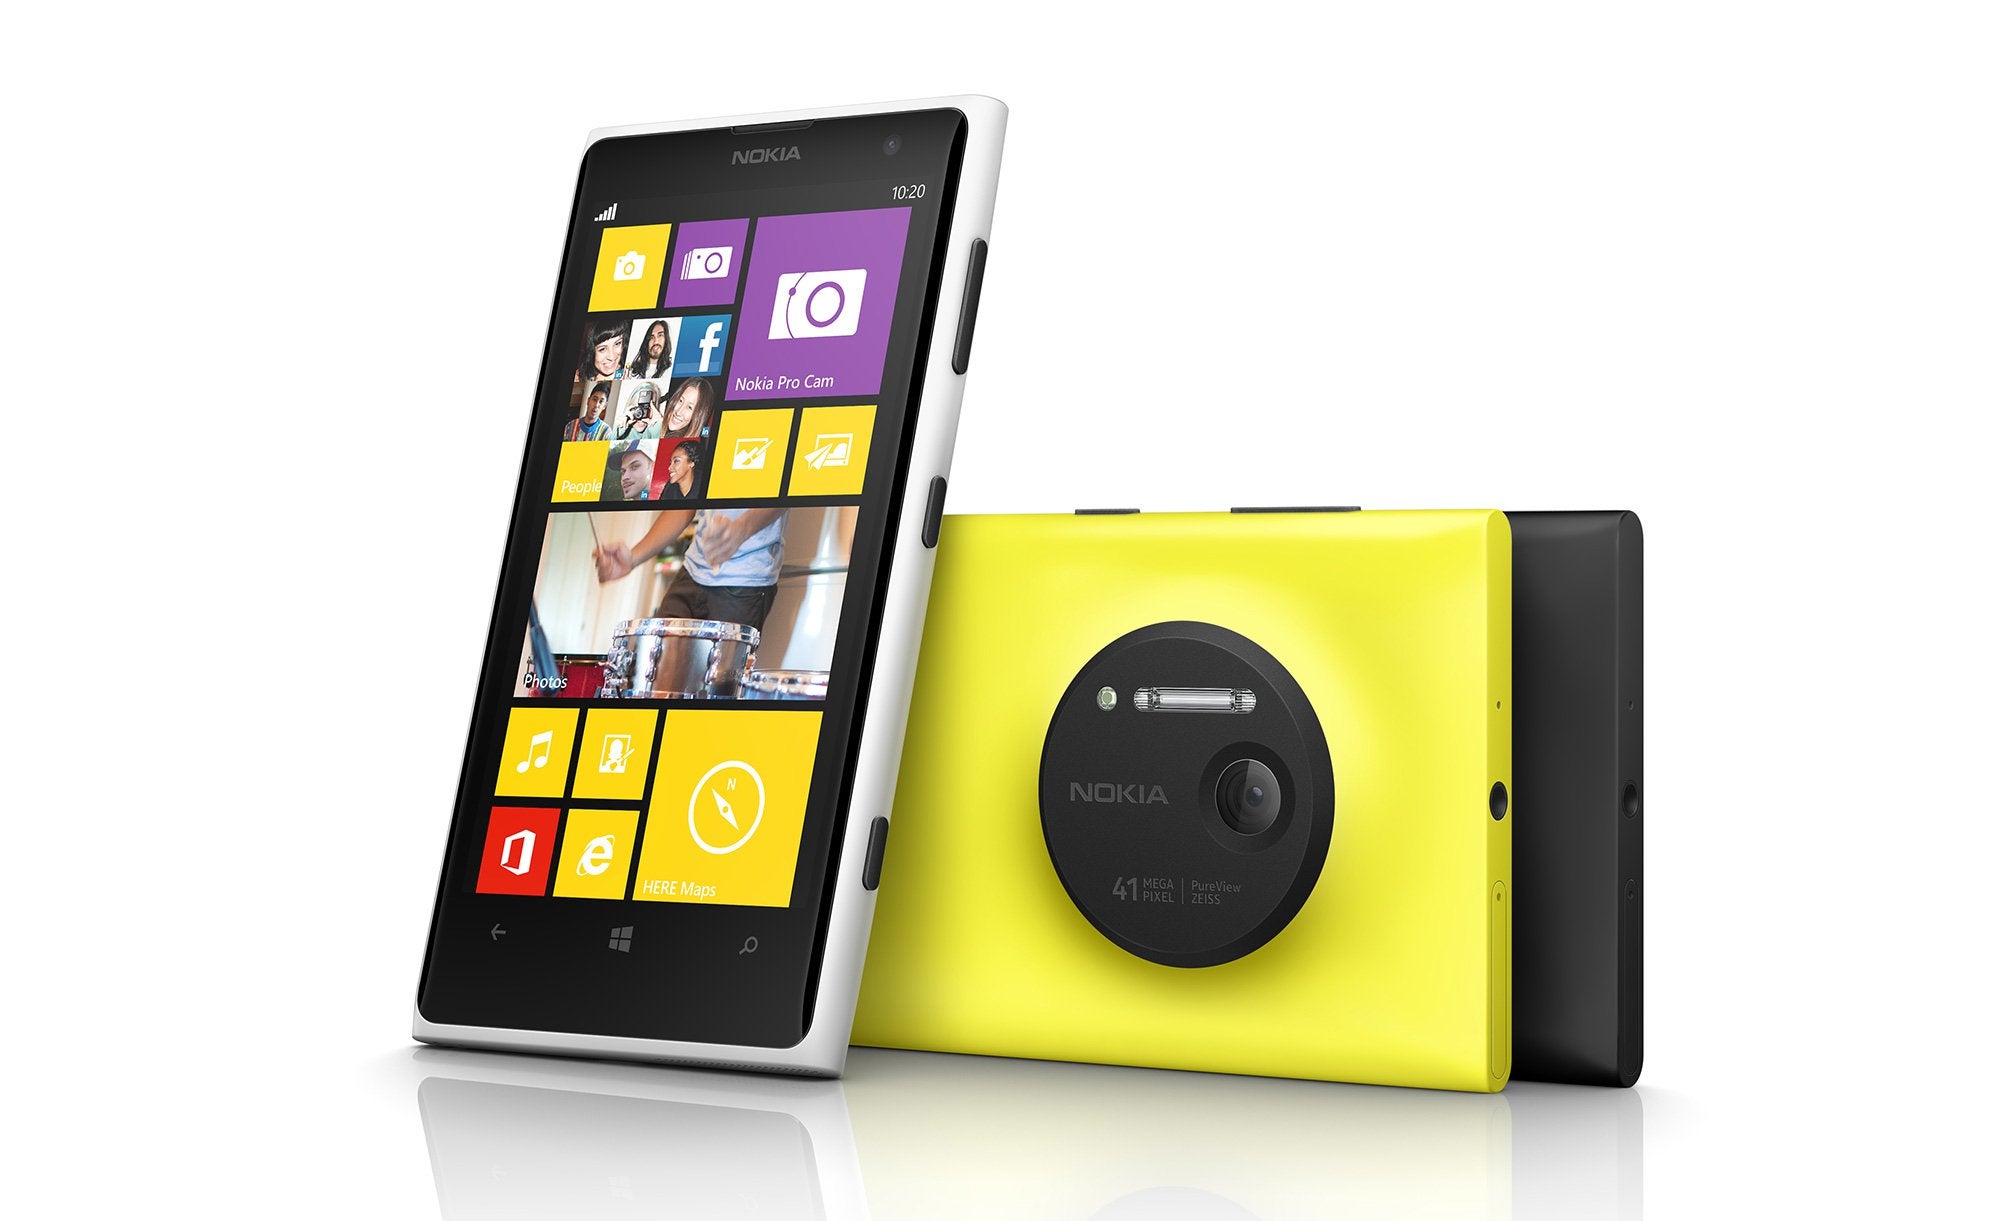 Microsoft Mobile is working on a Lumia 1020 successor